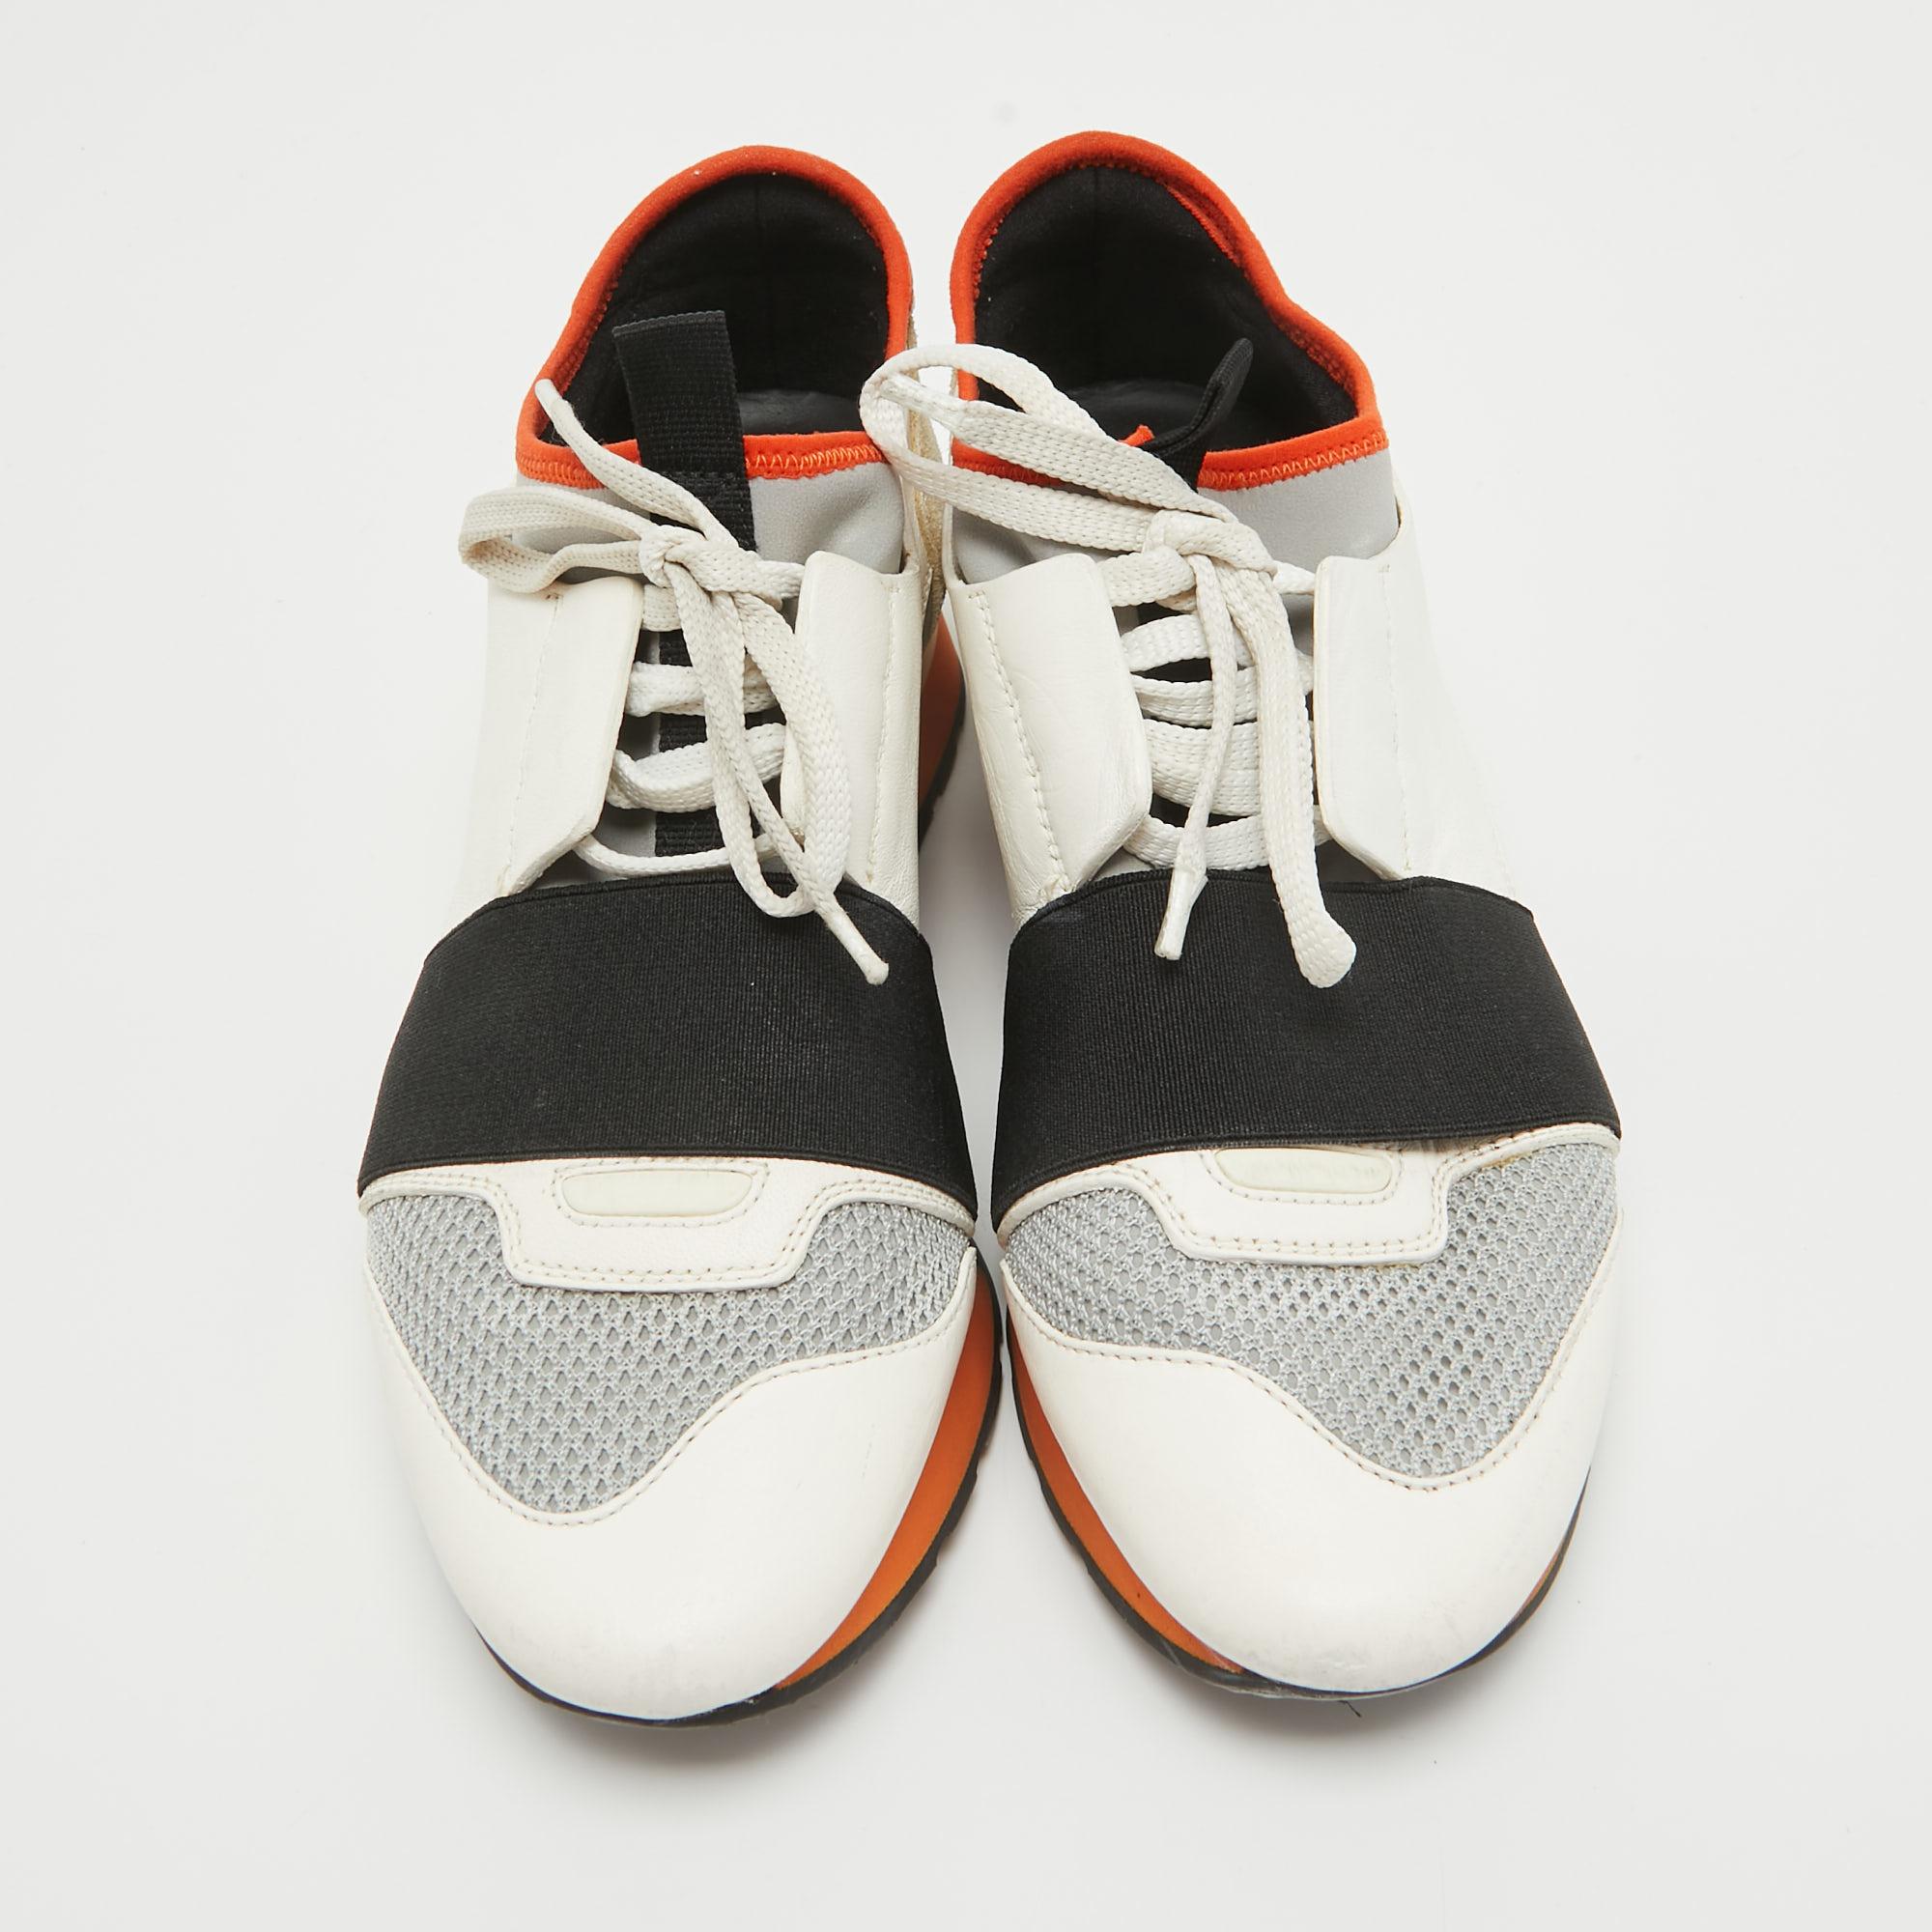 Balenciaga Tricolor Leather and Mesh Race Runner Sneakers Size 37 In Good Condition For Sale In Dubai, Al Qouz 2